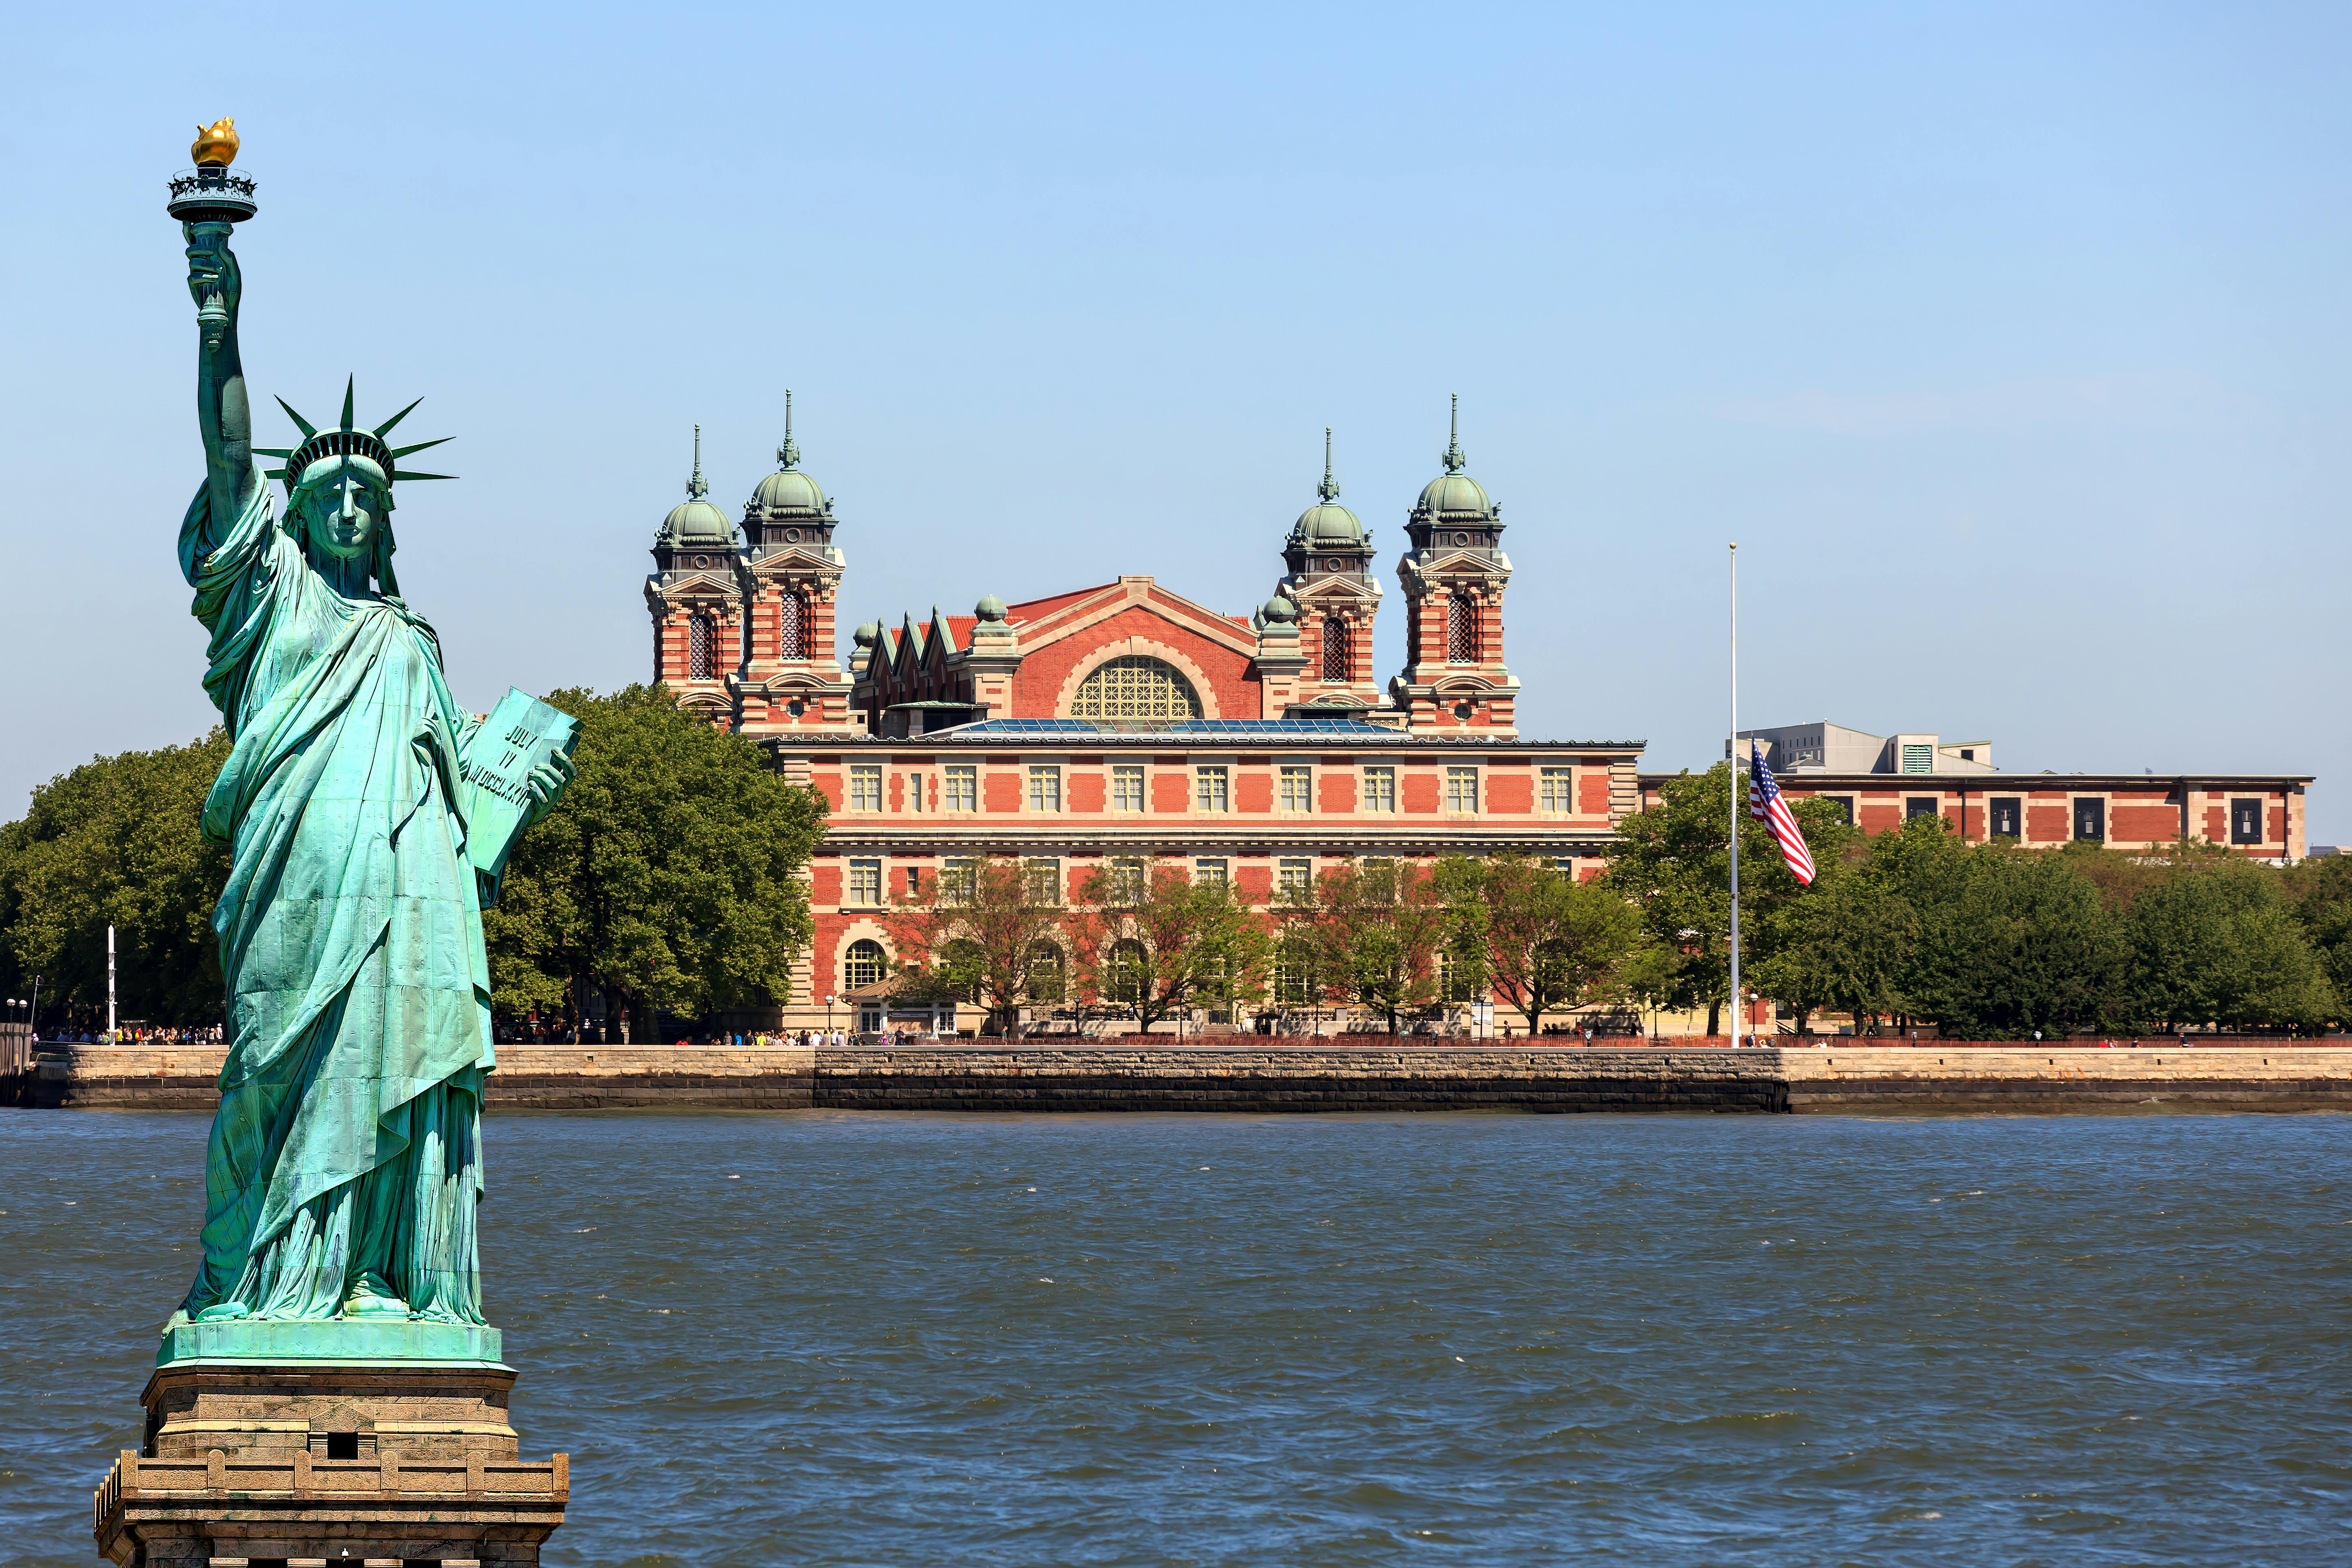 VIP-toegang: Ellis Island, Vrijheidsbeeld en Battery Park wandeltour